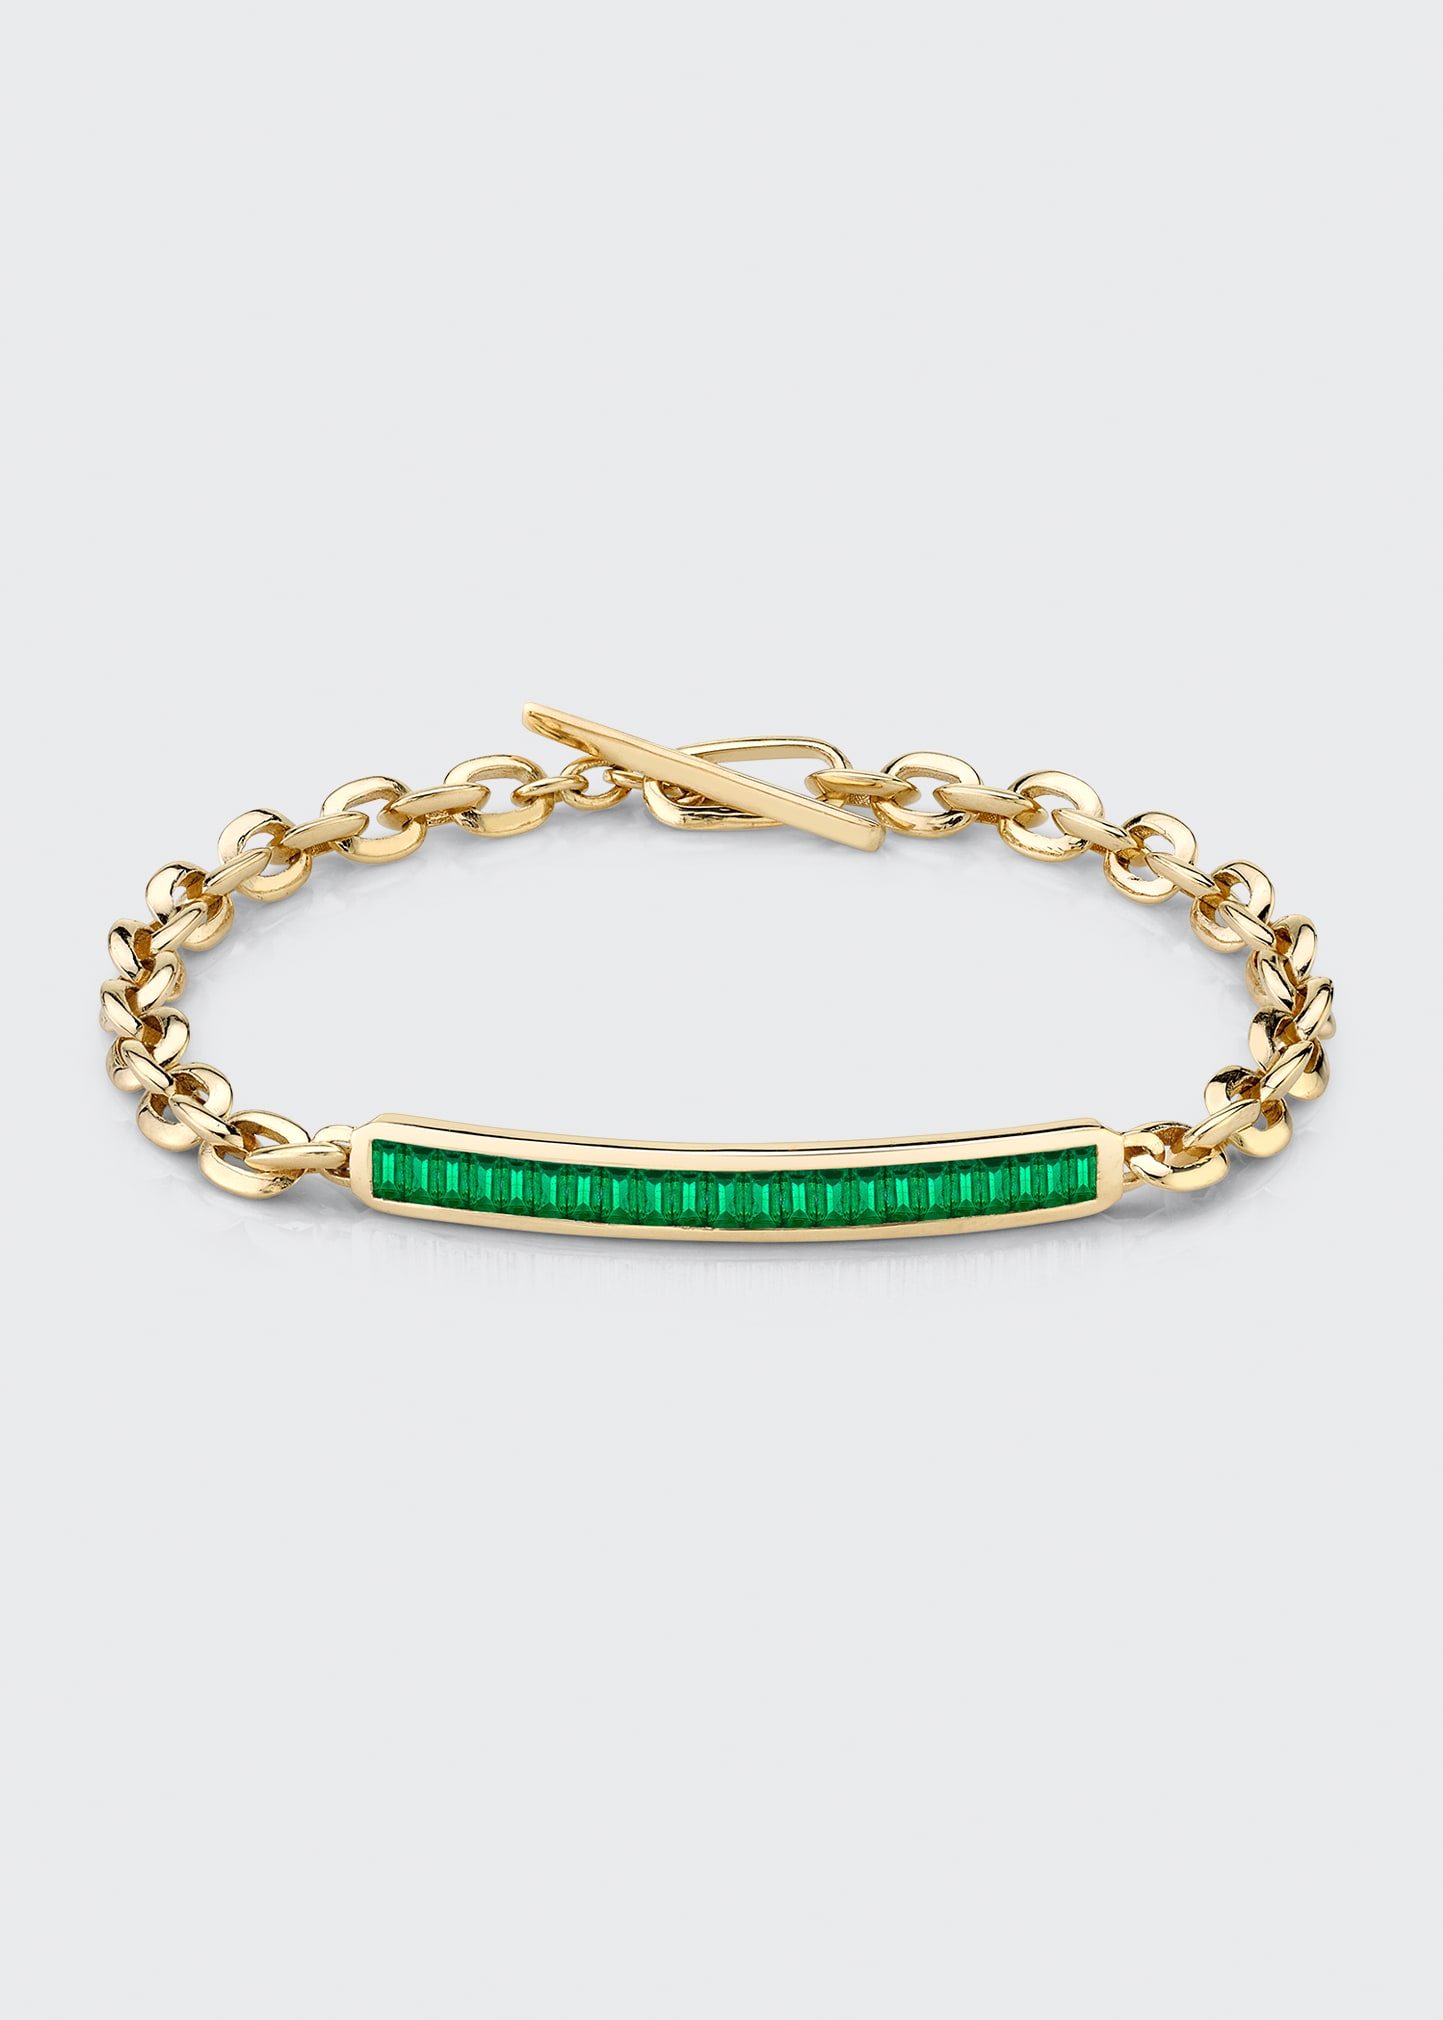 Lizzie Mandler Fine Jewelry Emerald Petite ID Bracelet in 18k Yellow Gold